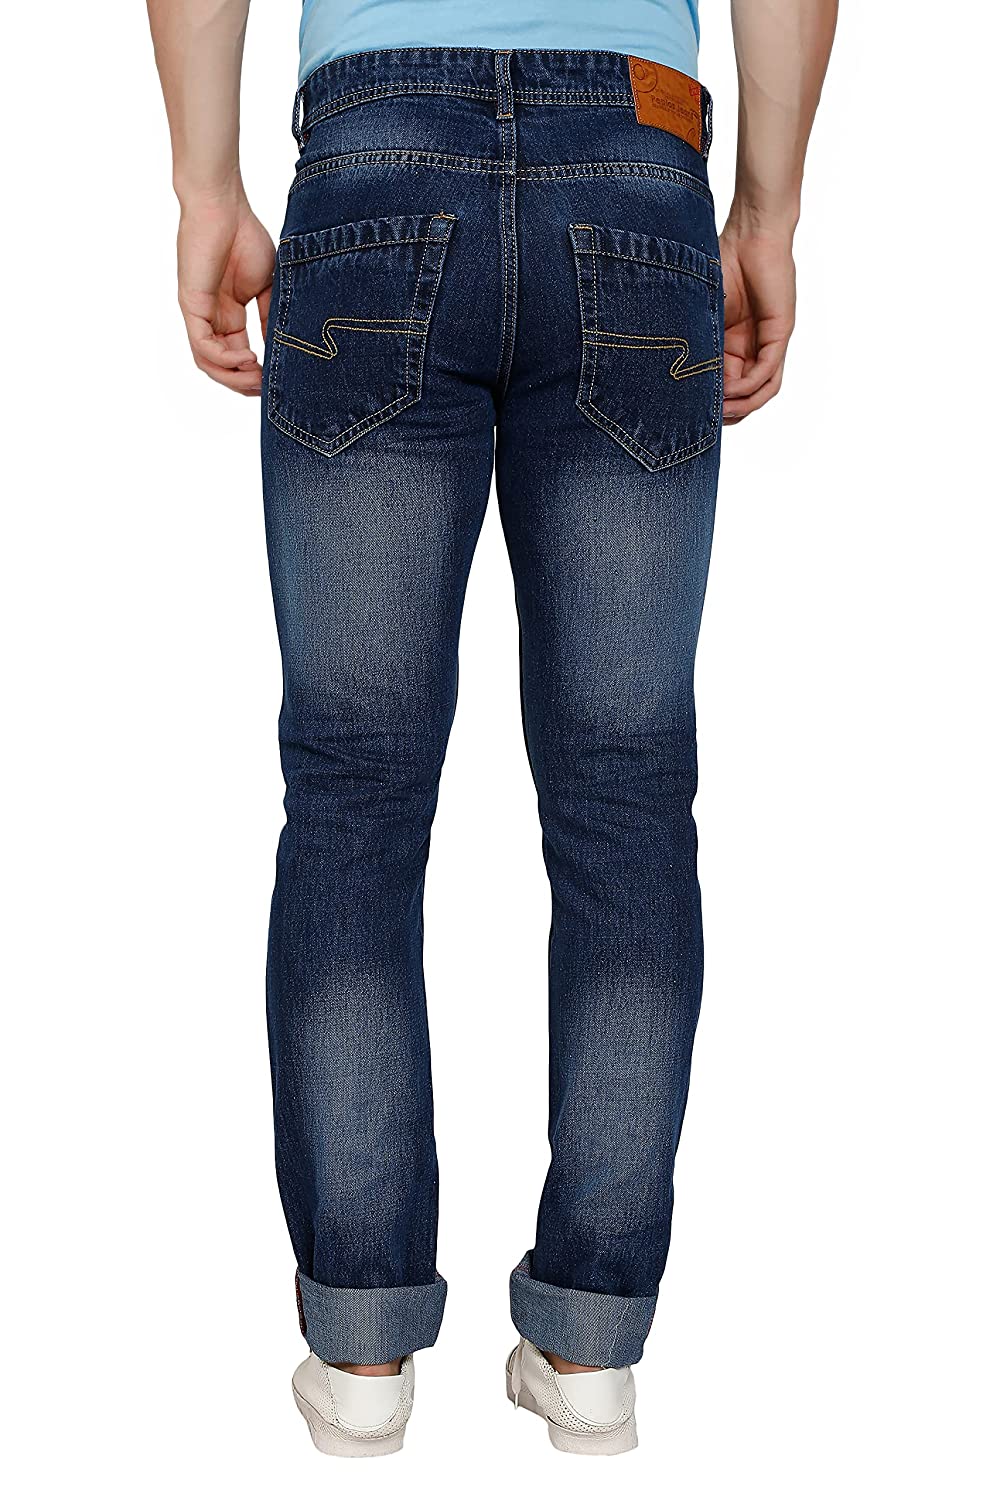 Slim Fit Dark Blue Color Premium Class Denim Jeans for Men